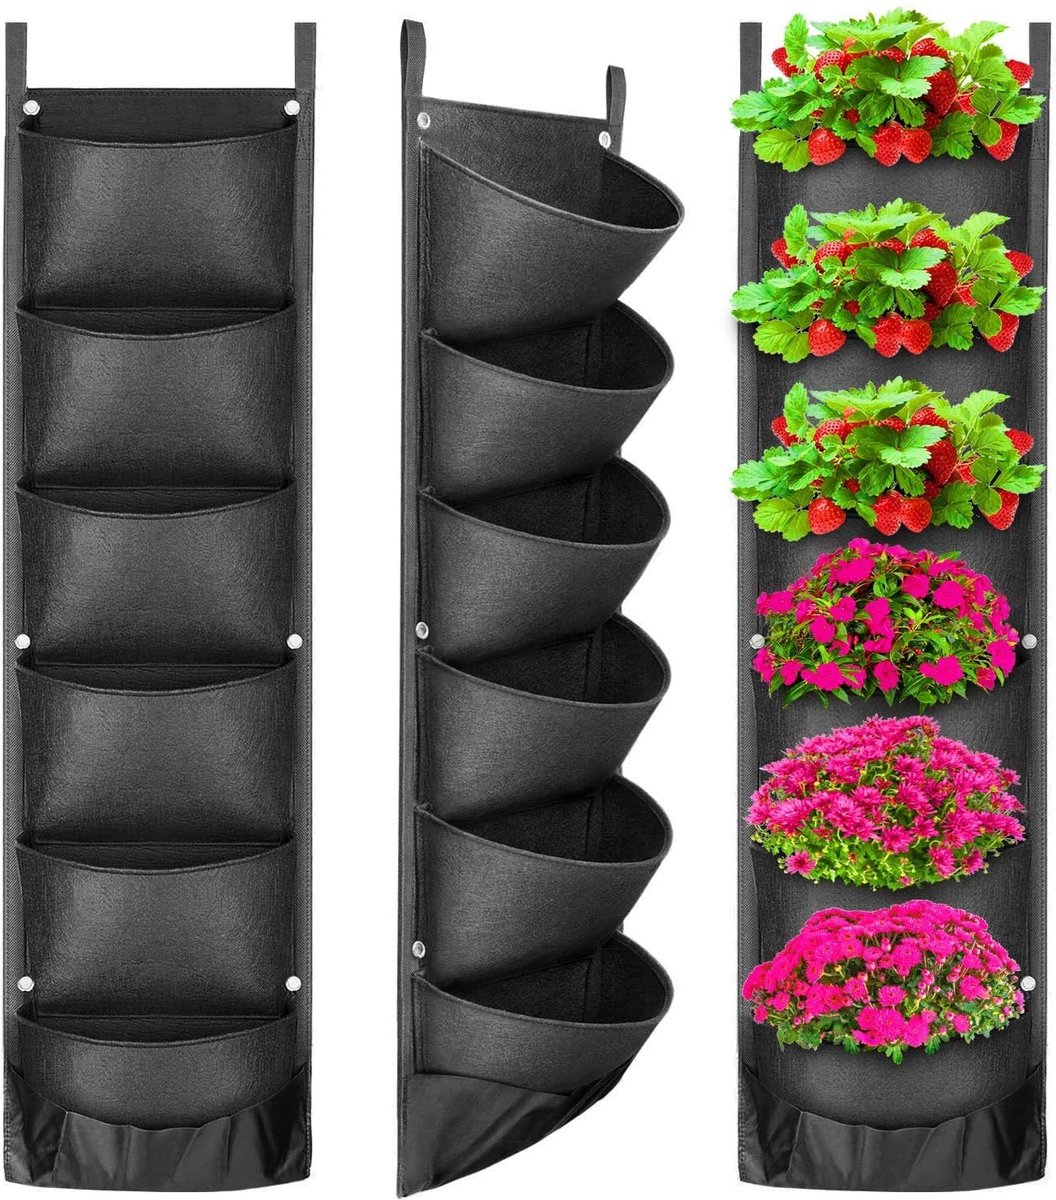 Verticale plantenzakken- Verticale tuin 6 zakken, tuinplantenzak- Kruidenmuur- Zwart -100/39 cm-Waterdicht